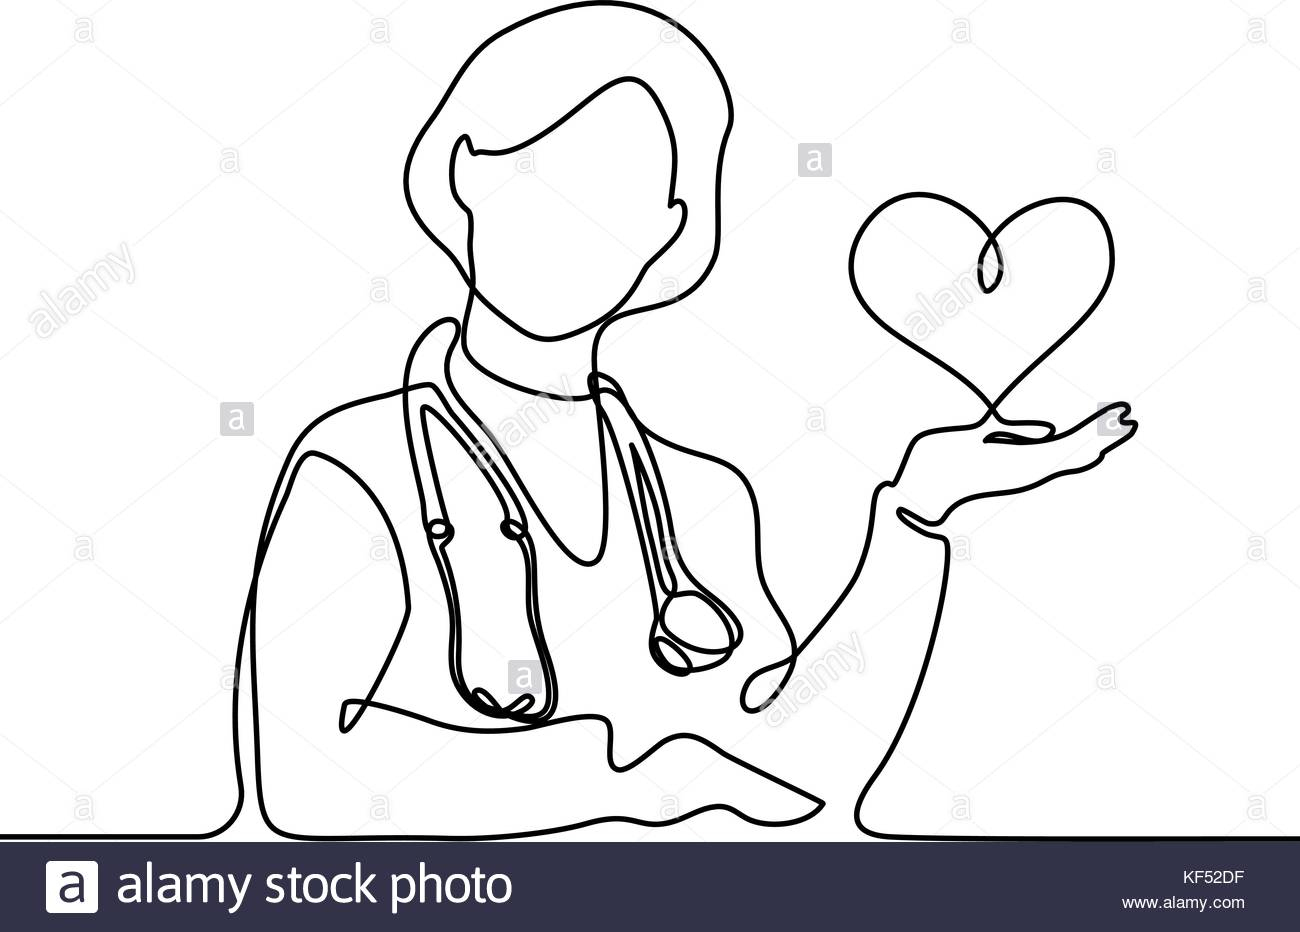 Doctor With Stethoscope Garder Coeur. Ligne Continue Dessin tout Dessin Stéthoscope